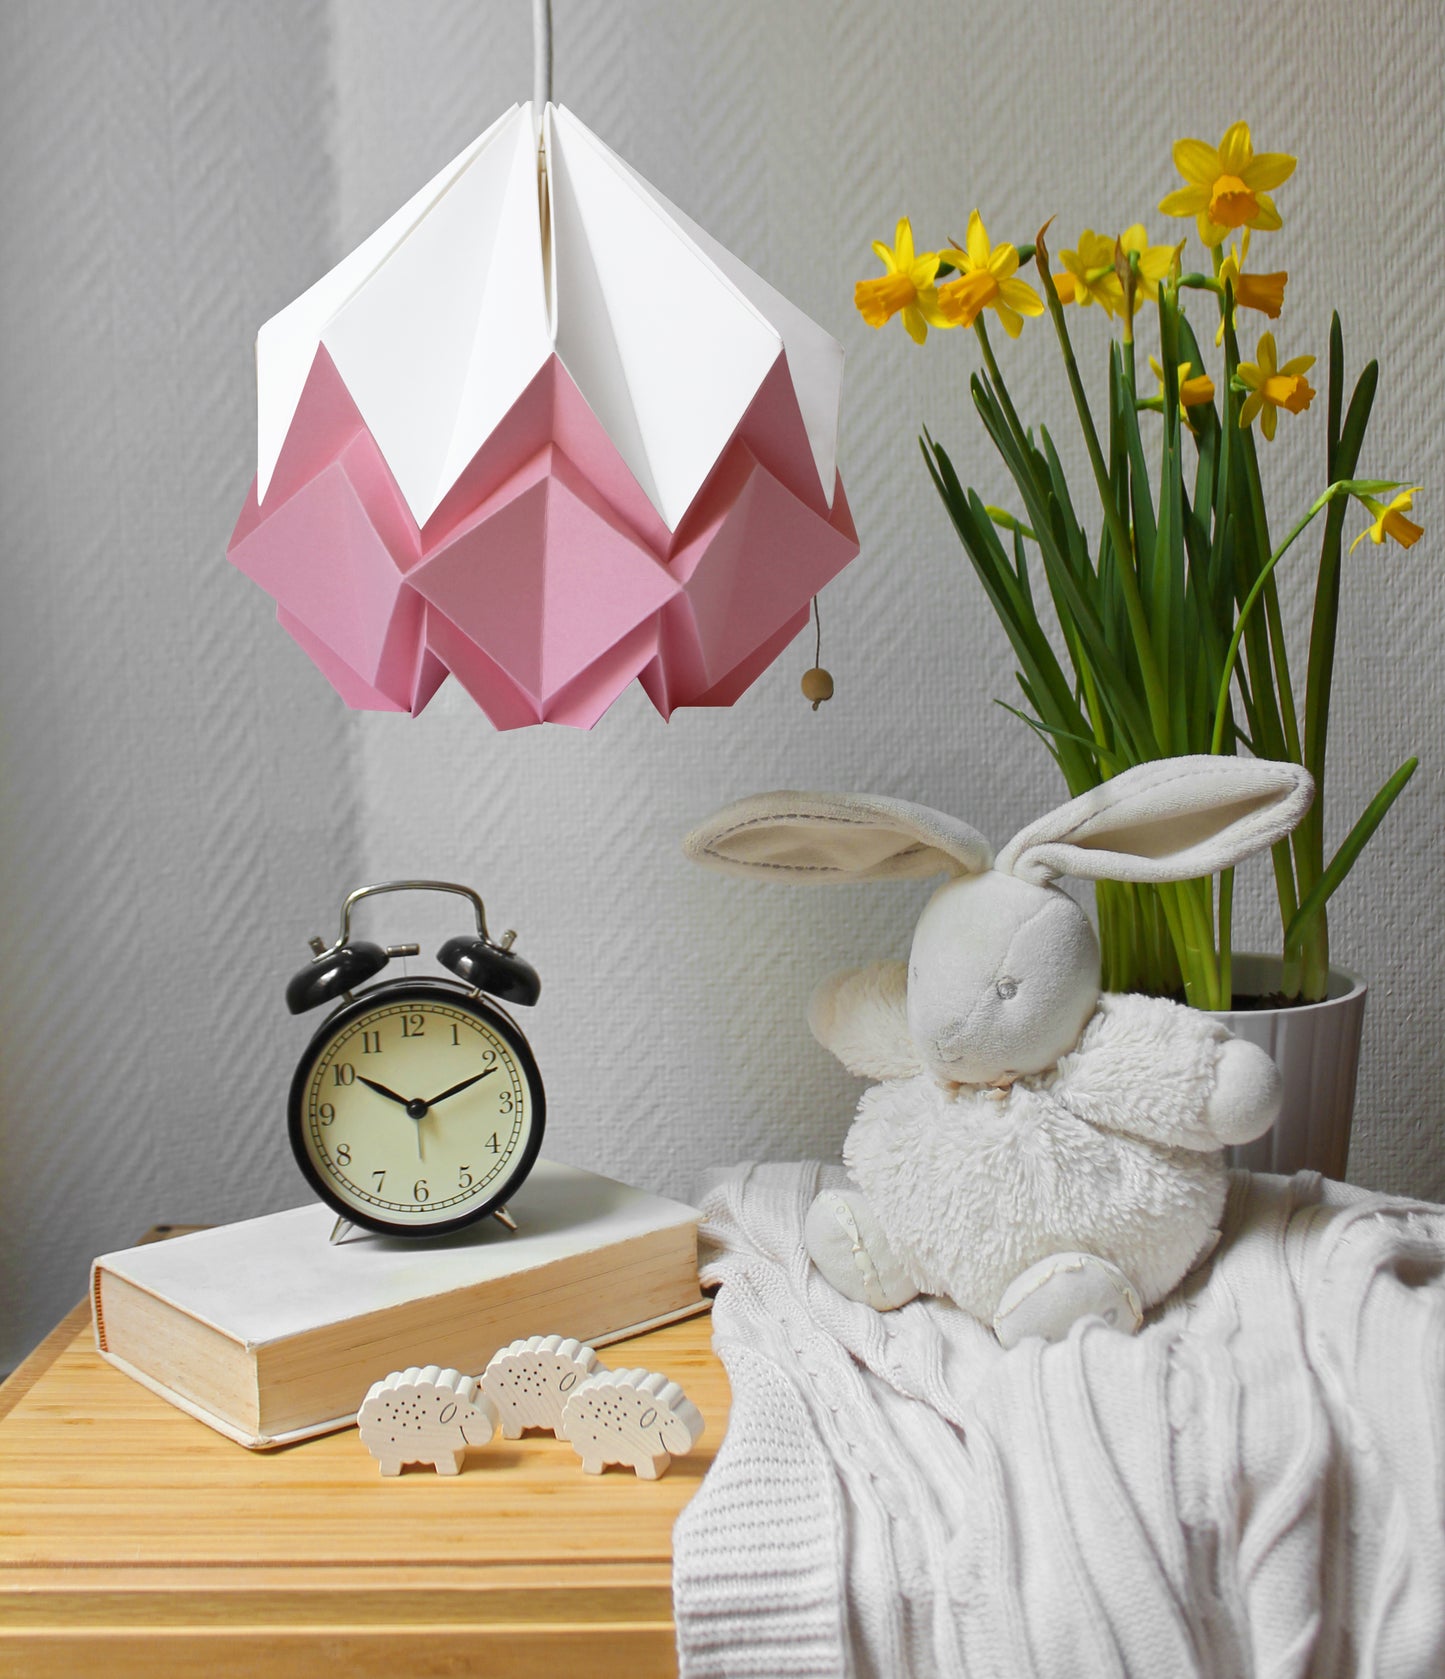 Origami Pendant Light Bicolor in Paper - Size S